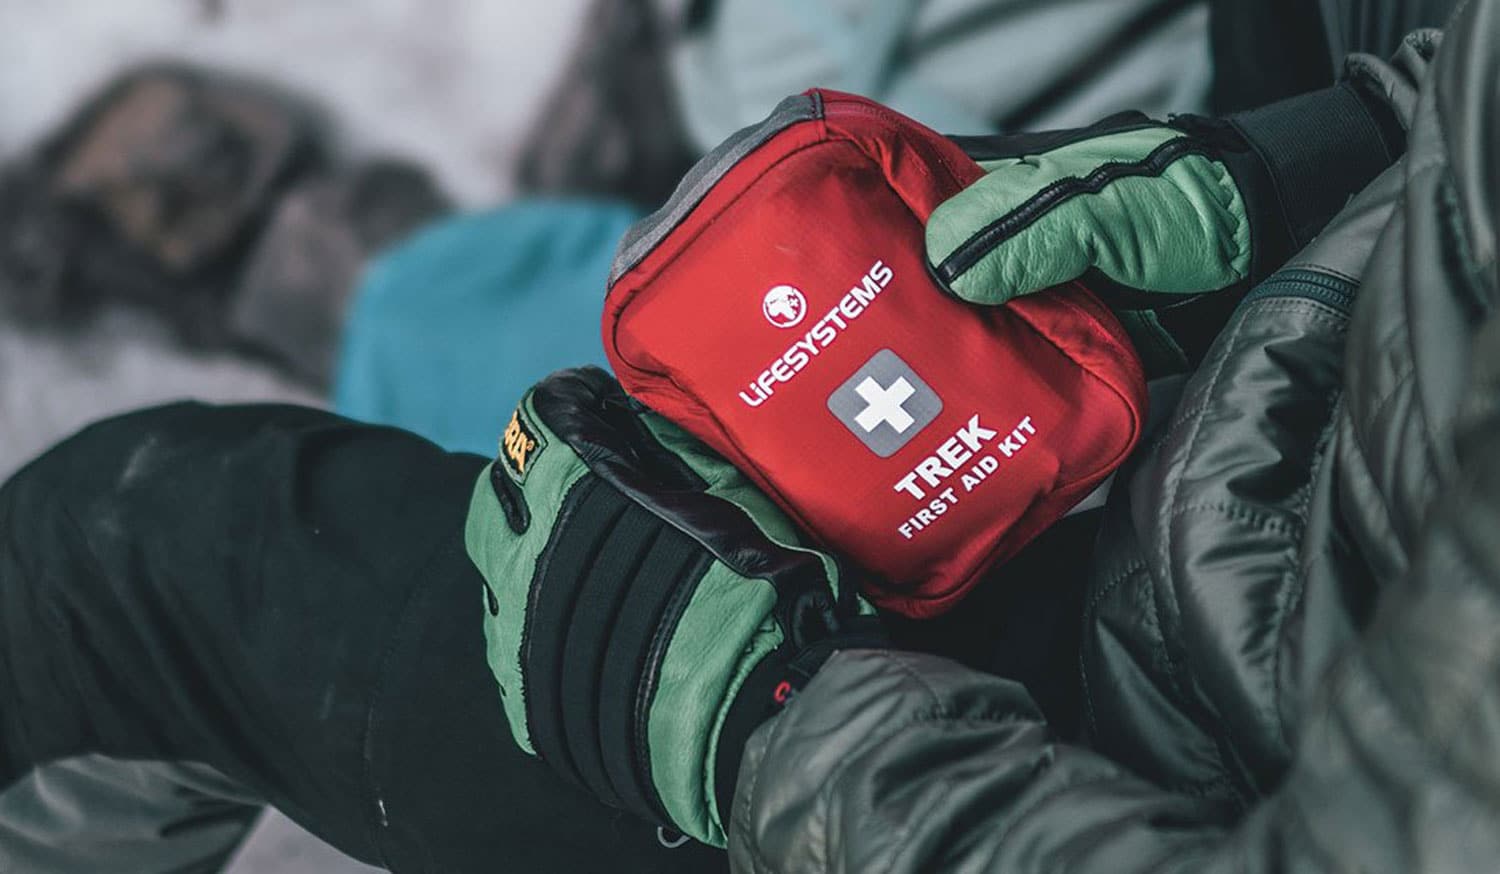 TREK first aid kit